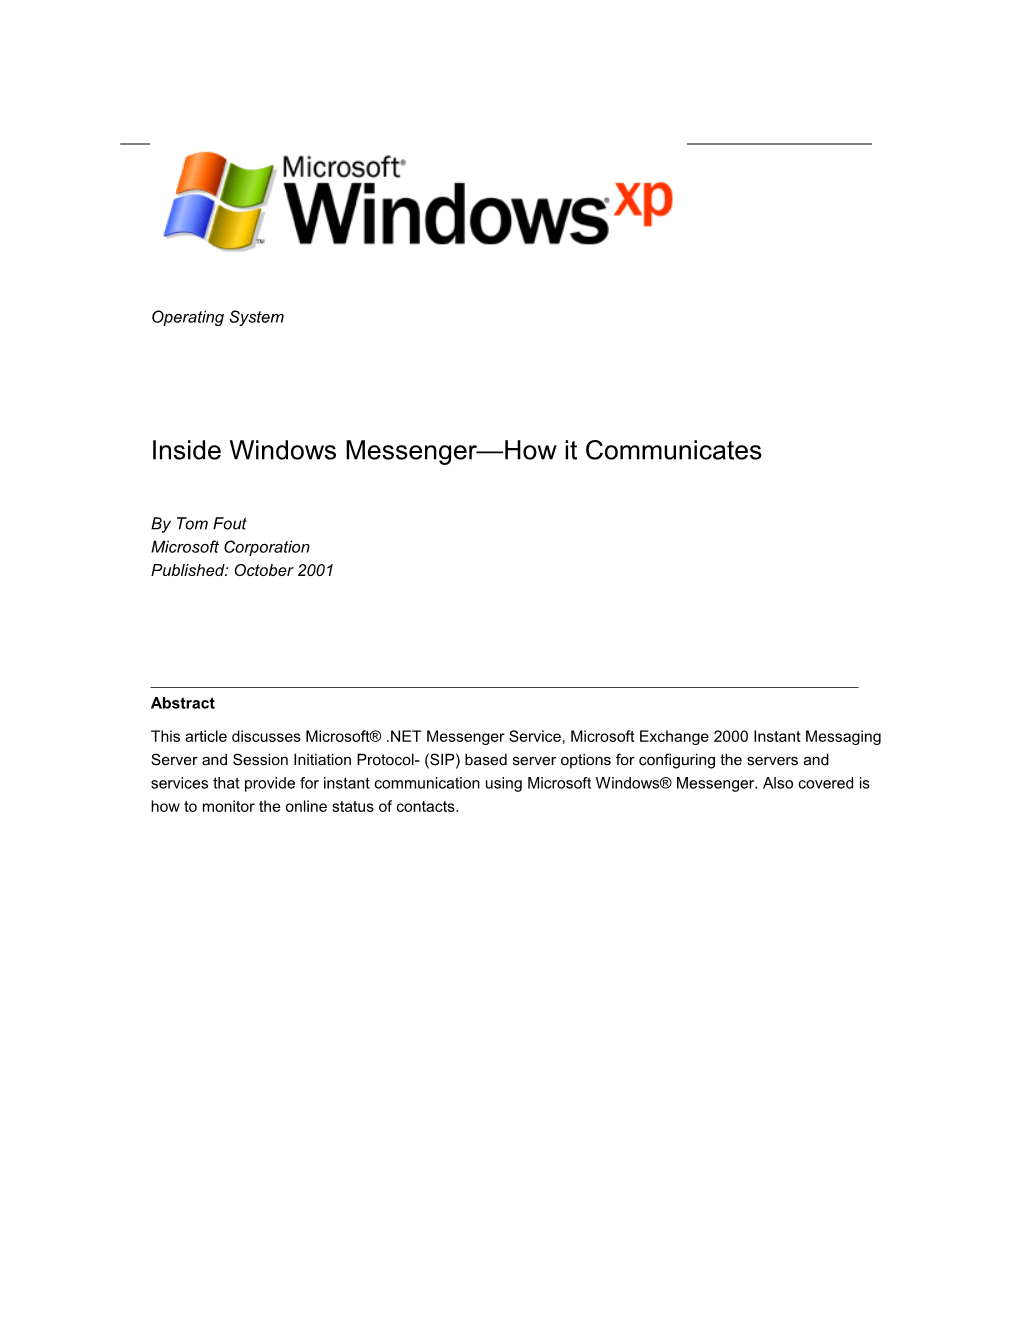 Inside Windows Messenger How It Communicates